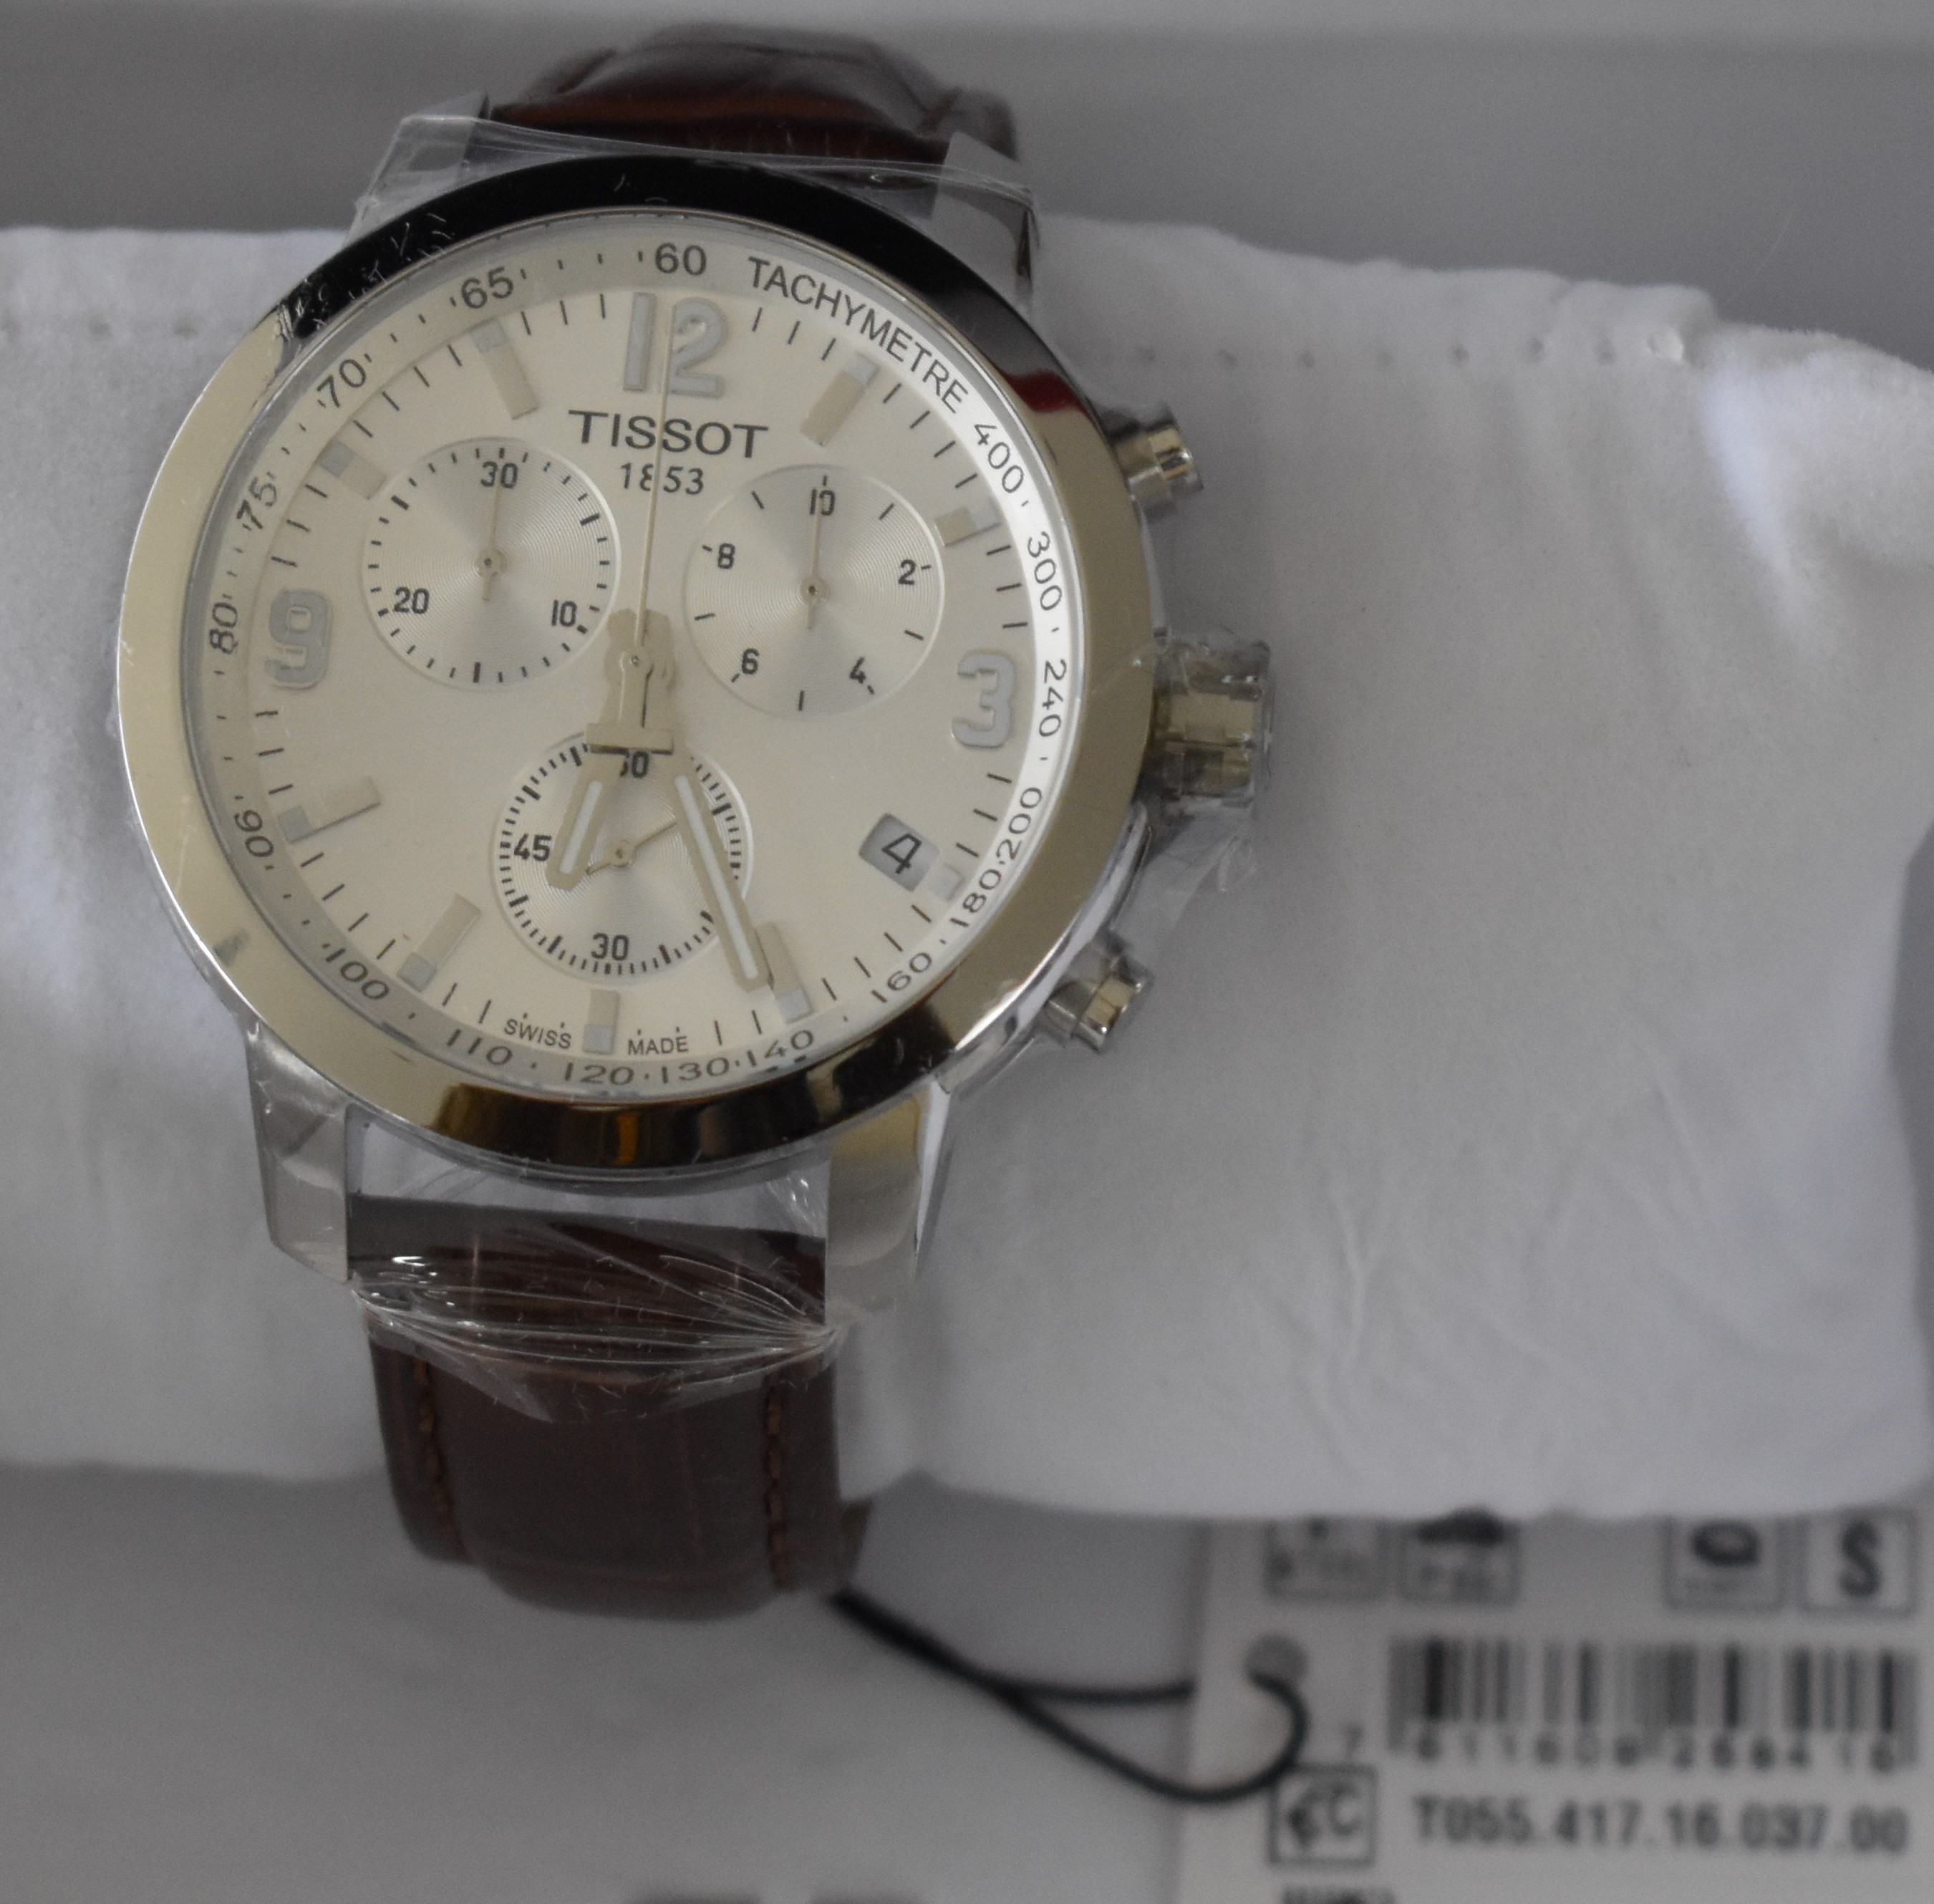 Tissot Men's Watch TO55.417.16.037.00 - Image 2 of 3